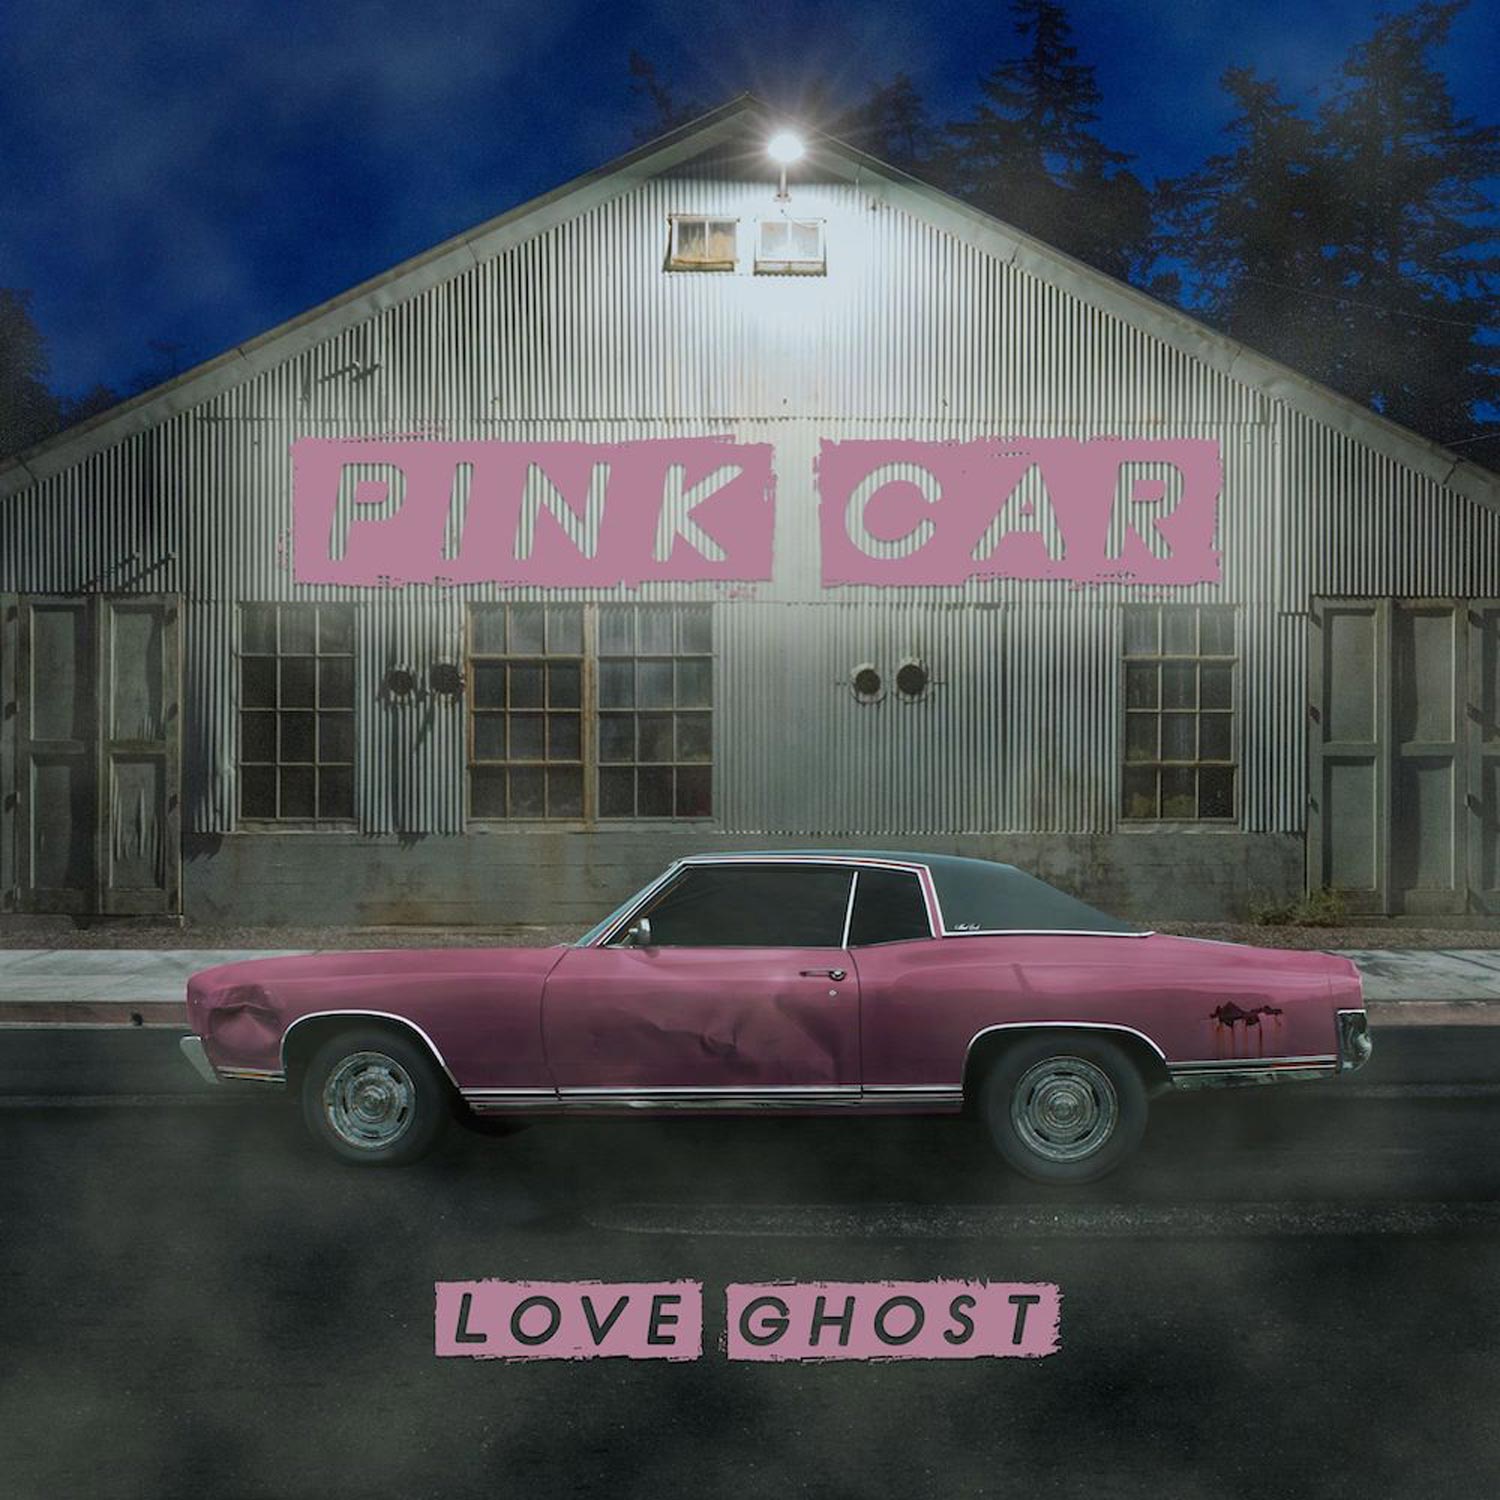 Love Ghost – “Pink Car”